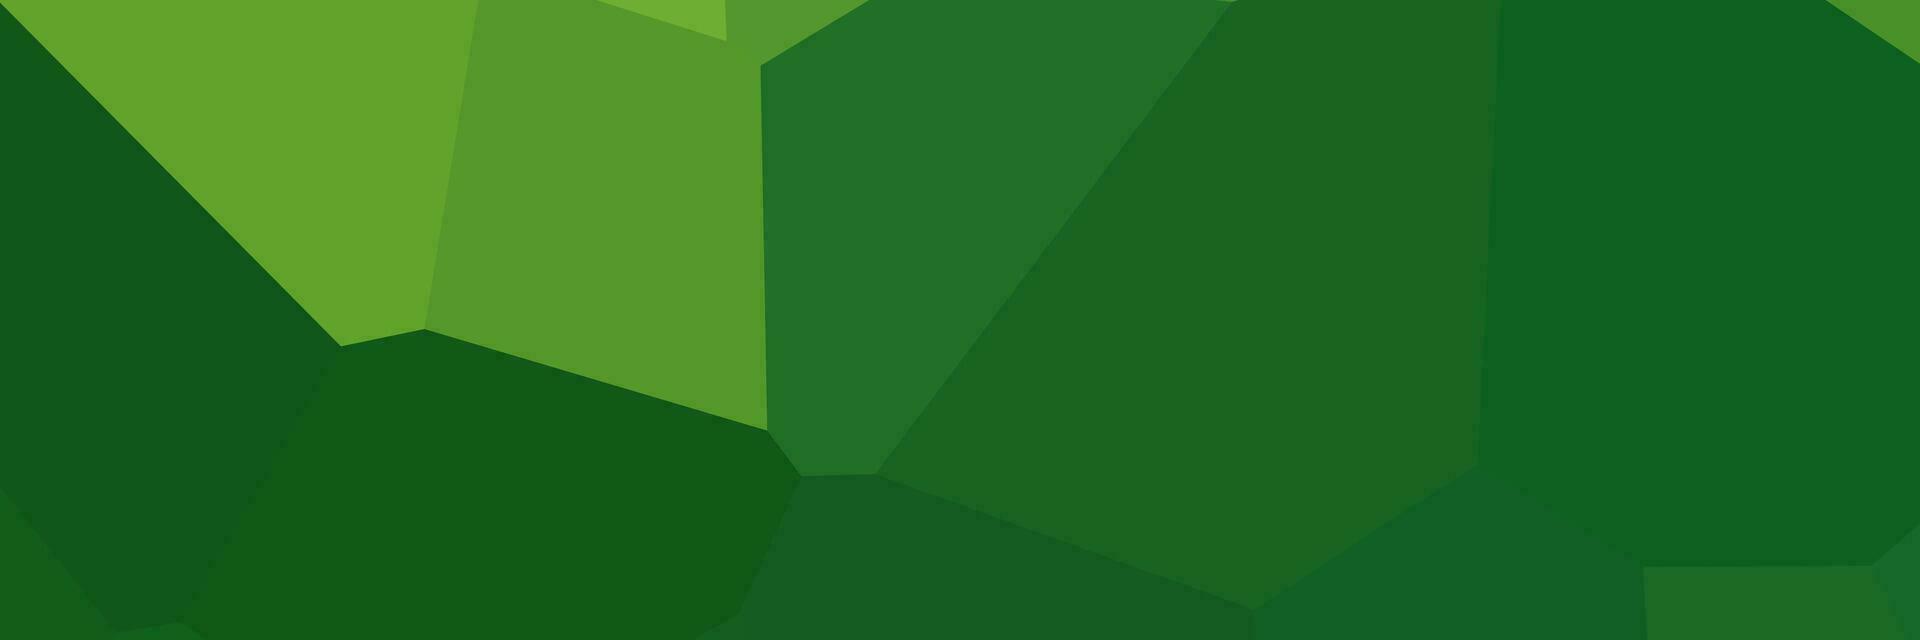 abstract green bio elegant background vector